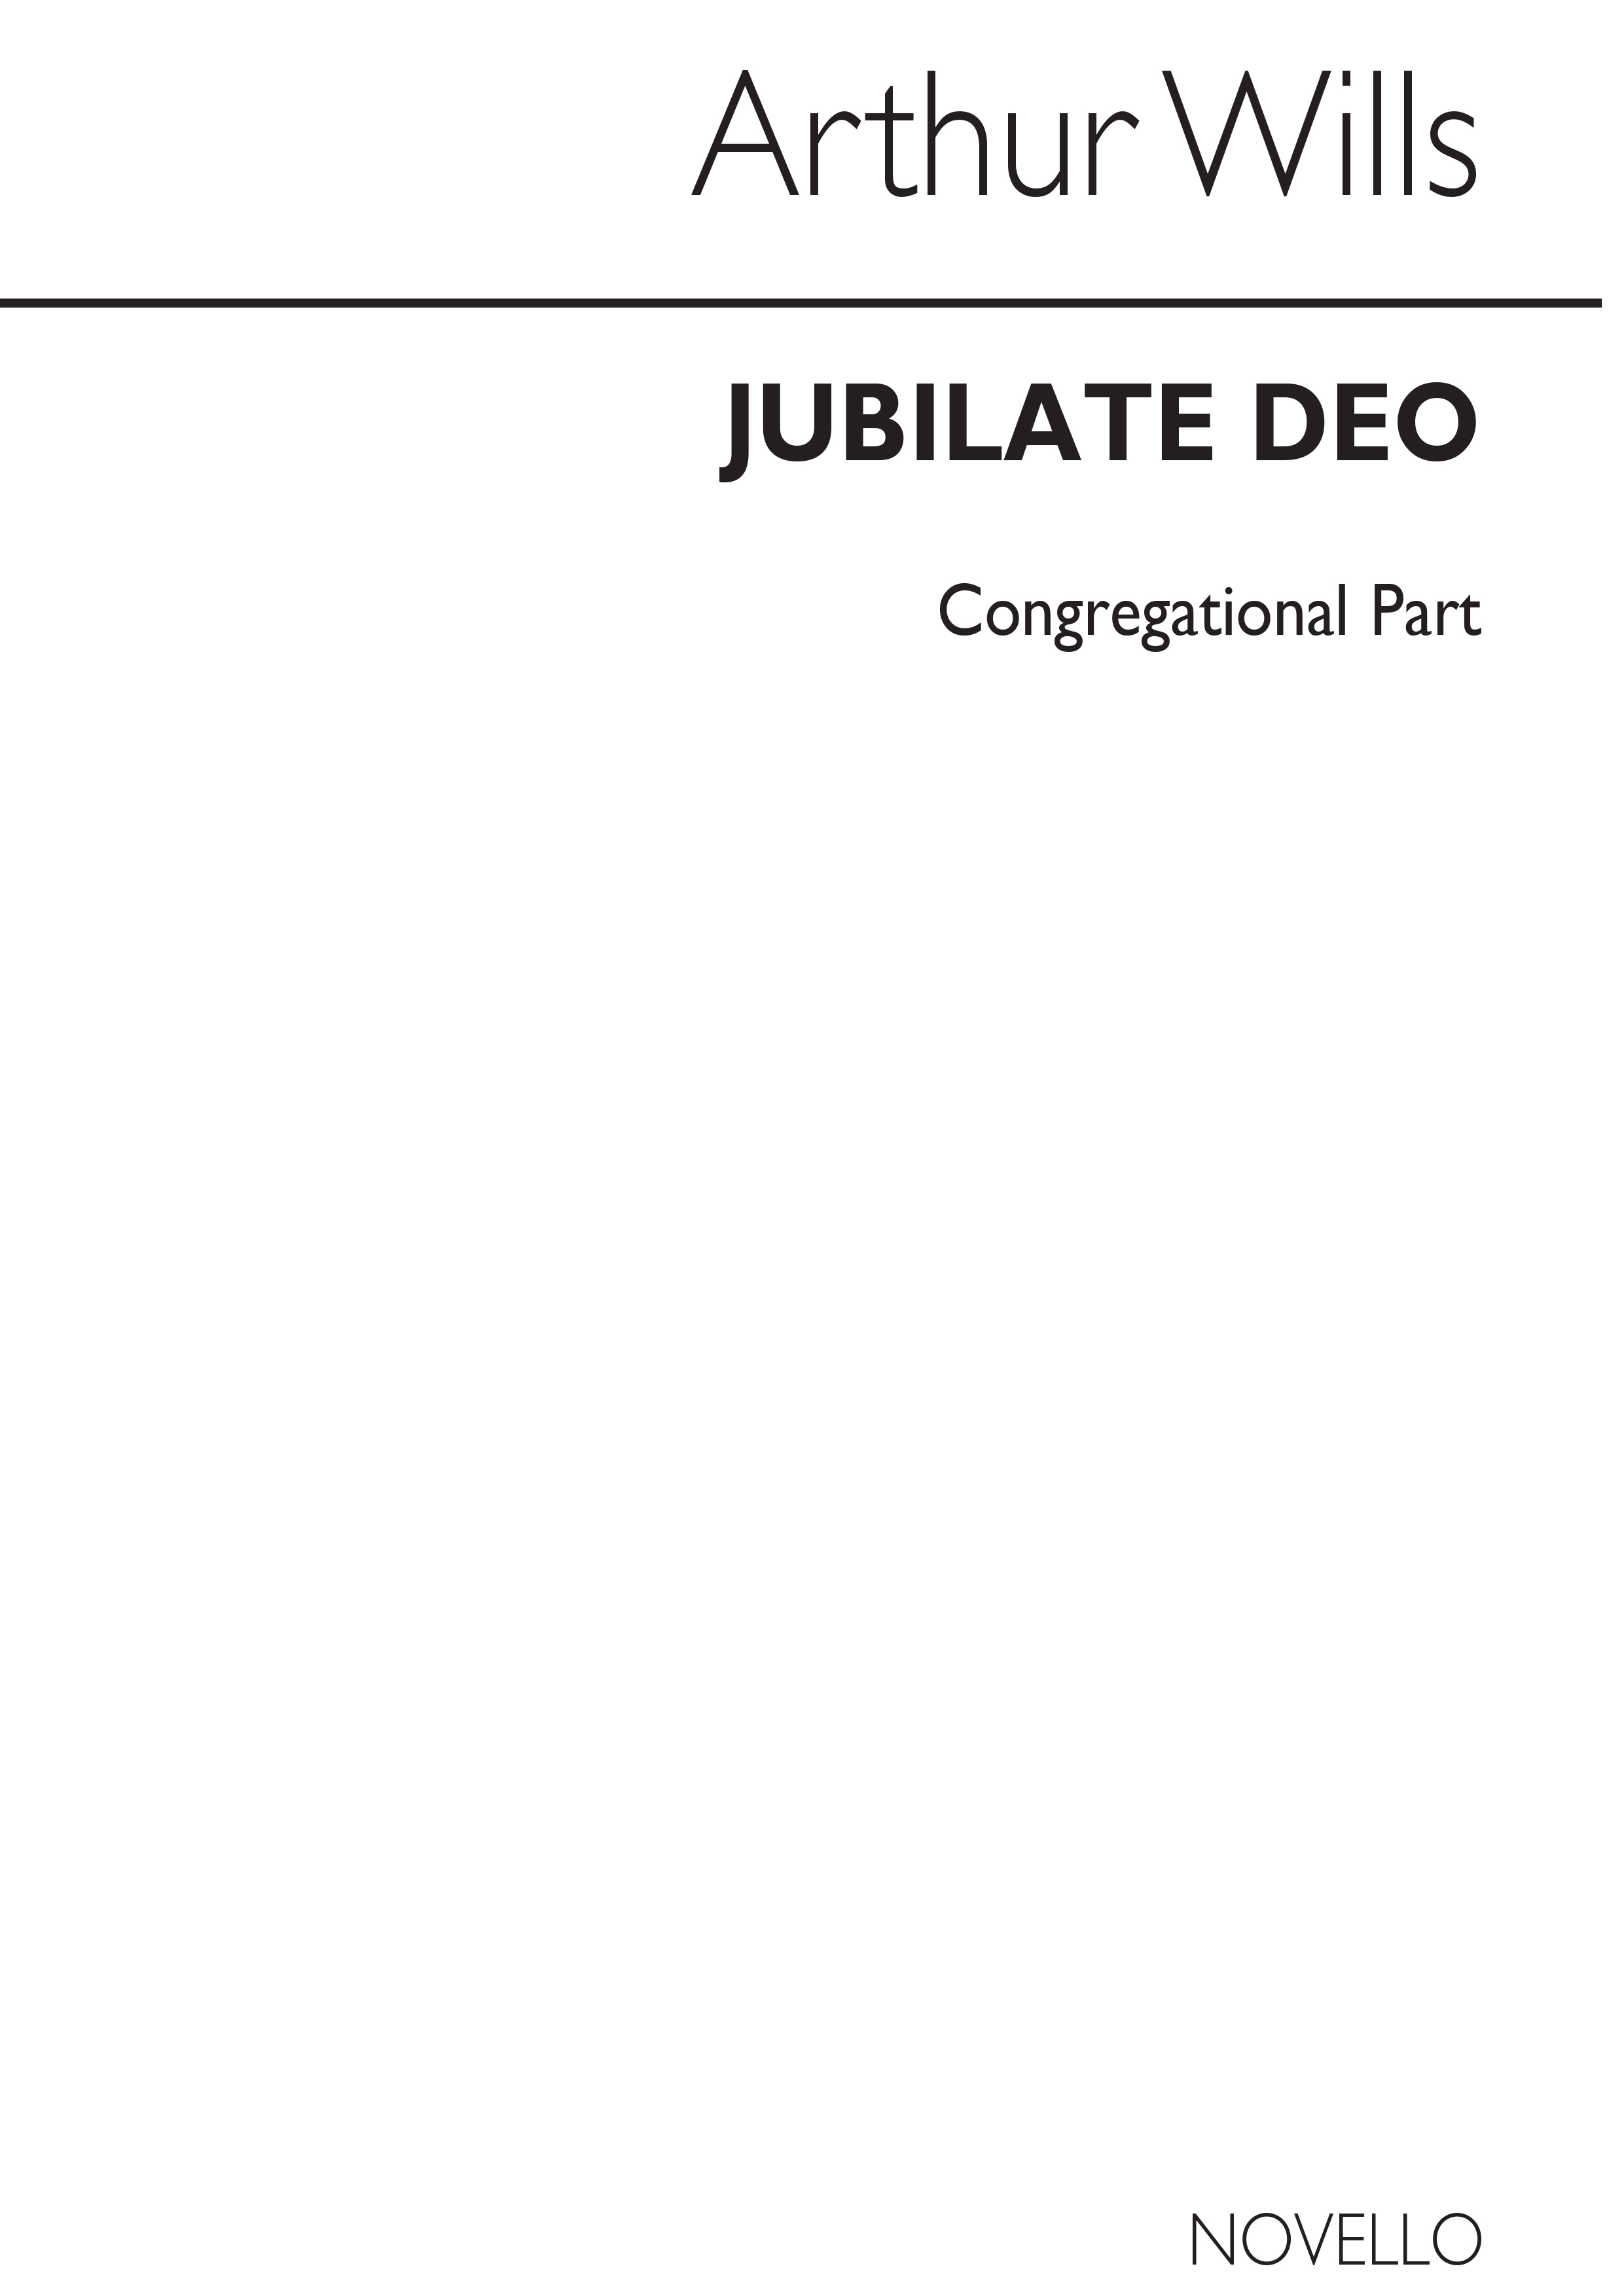 Arthur Wills: Jubilate Deo Congregational Part (Optional)